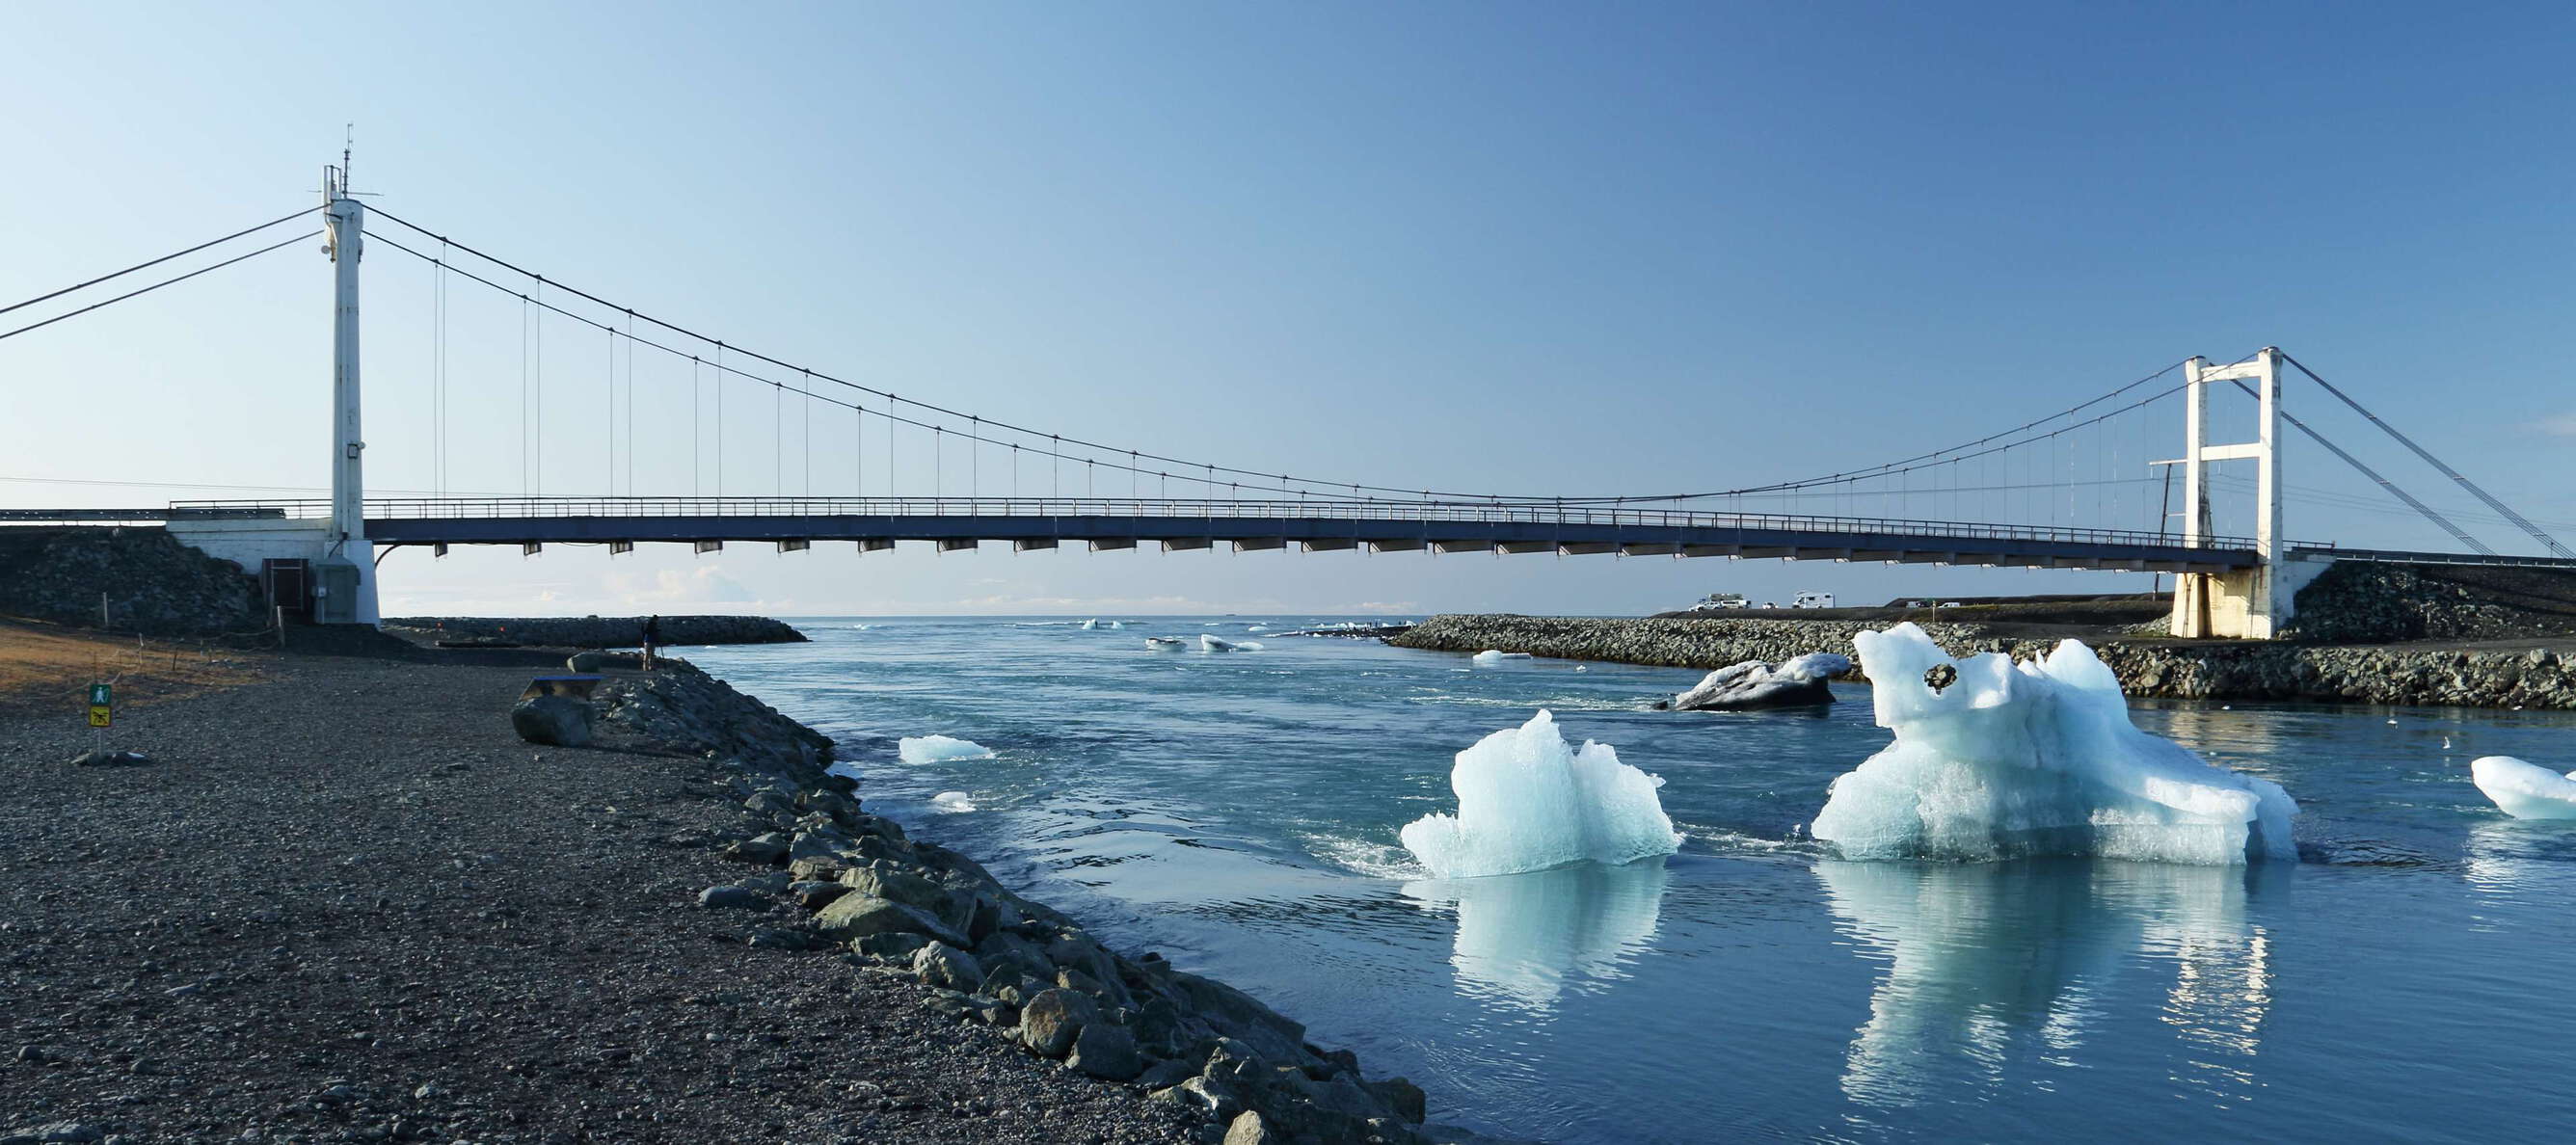 Jökulsárlón | Outlet with icebergs and bridge